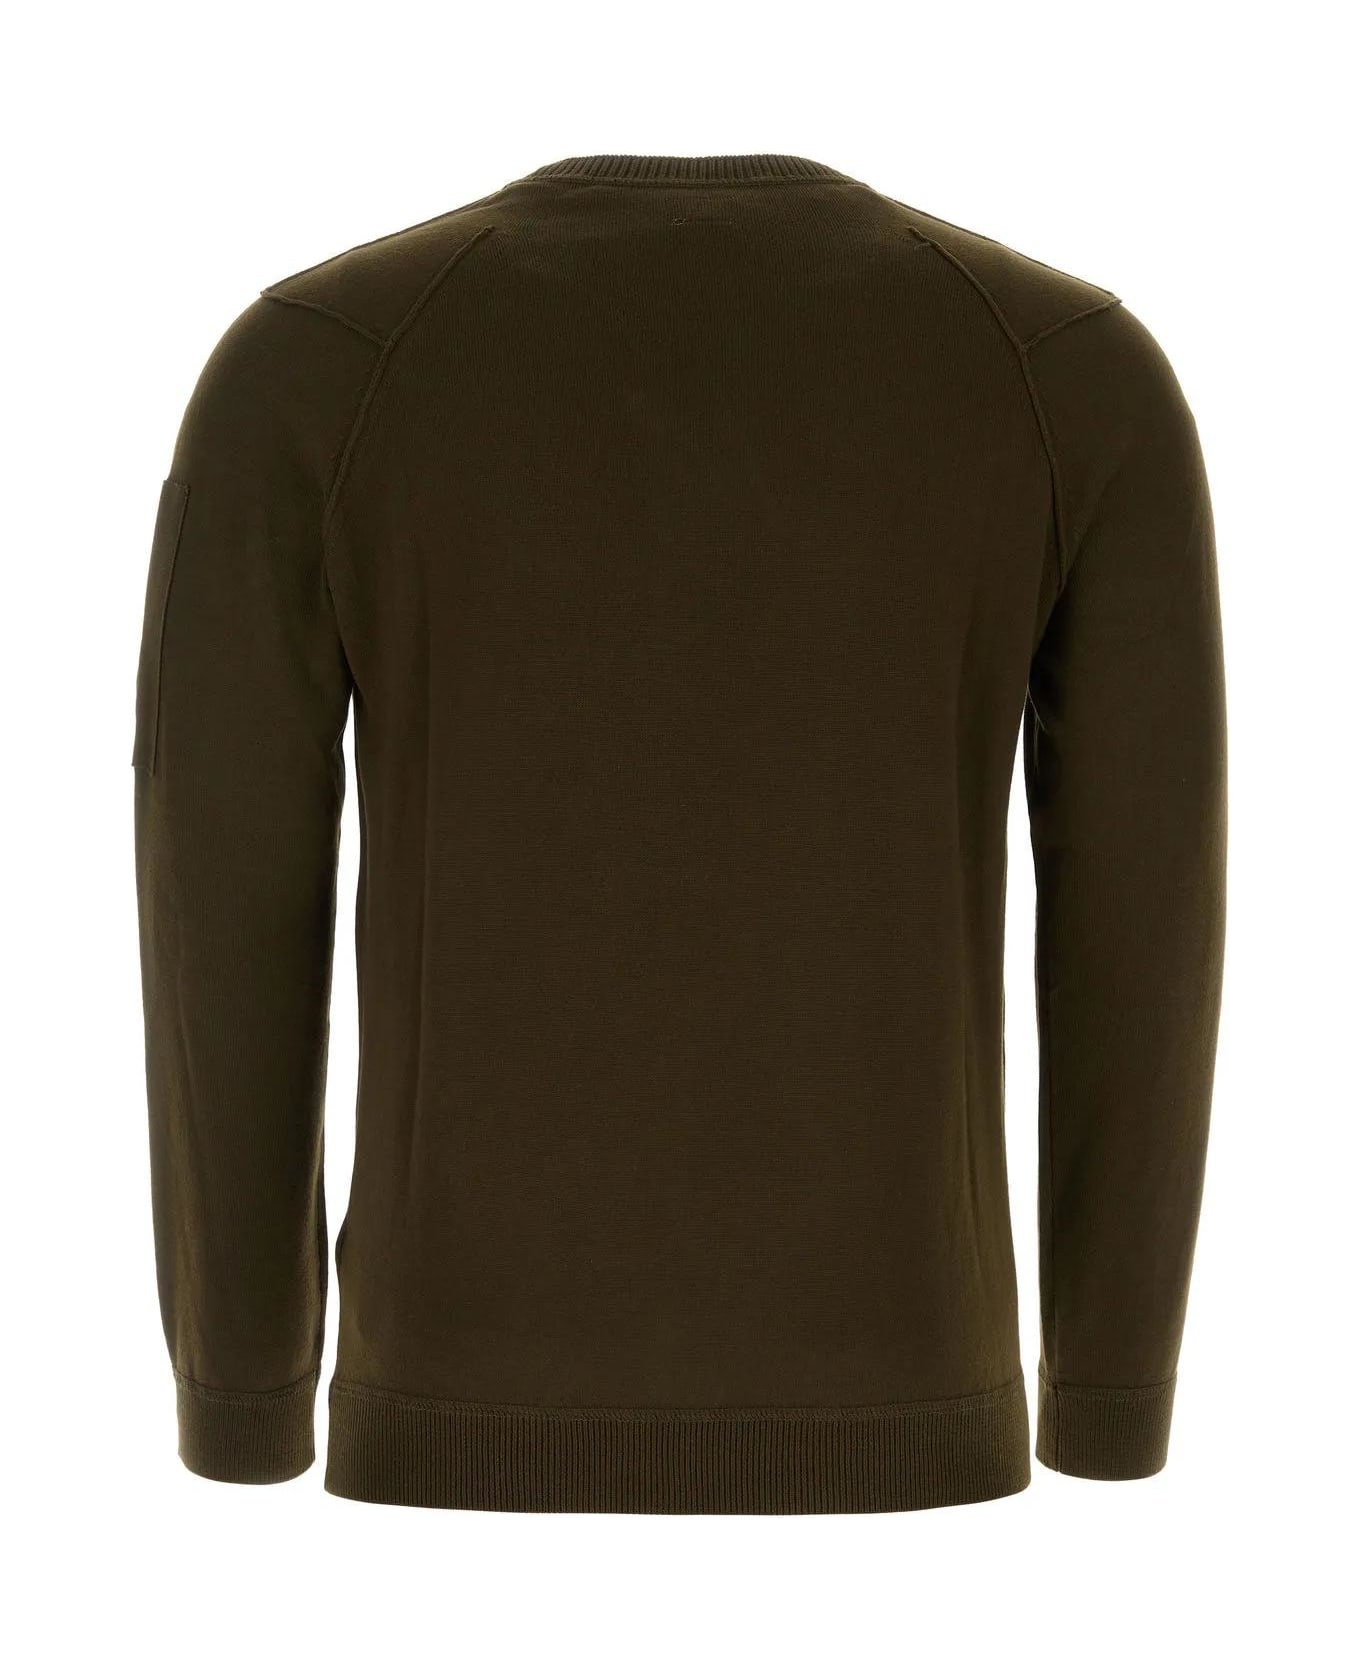 C.P. Company Dark Green Cotton Sweater - IVY GREEN